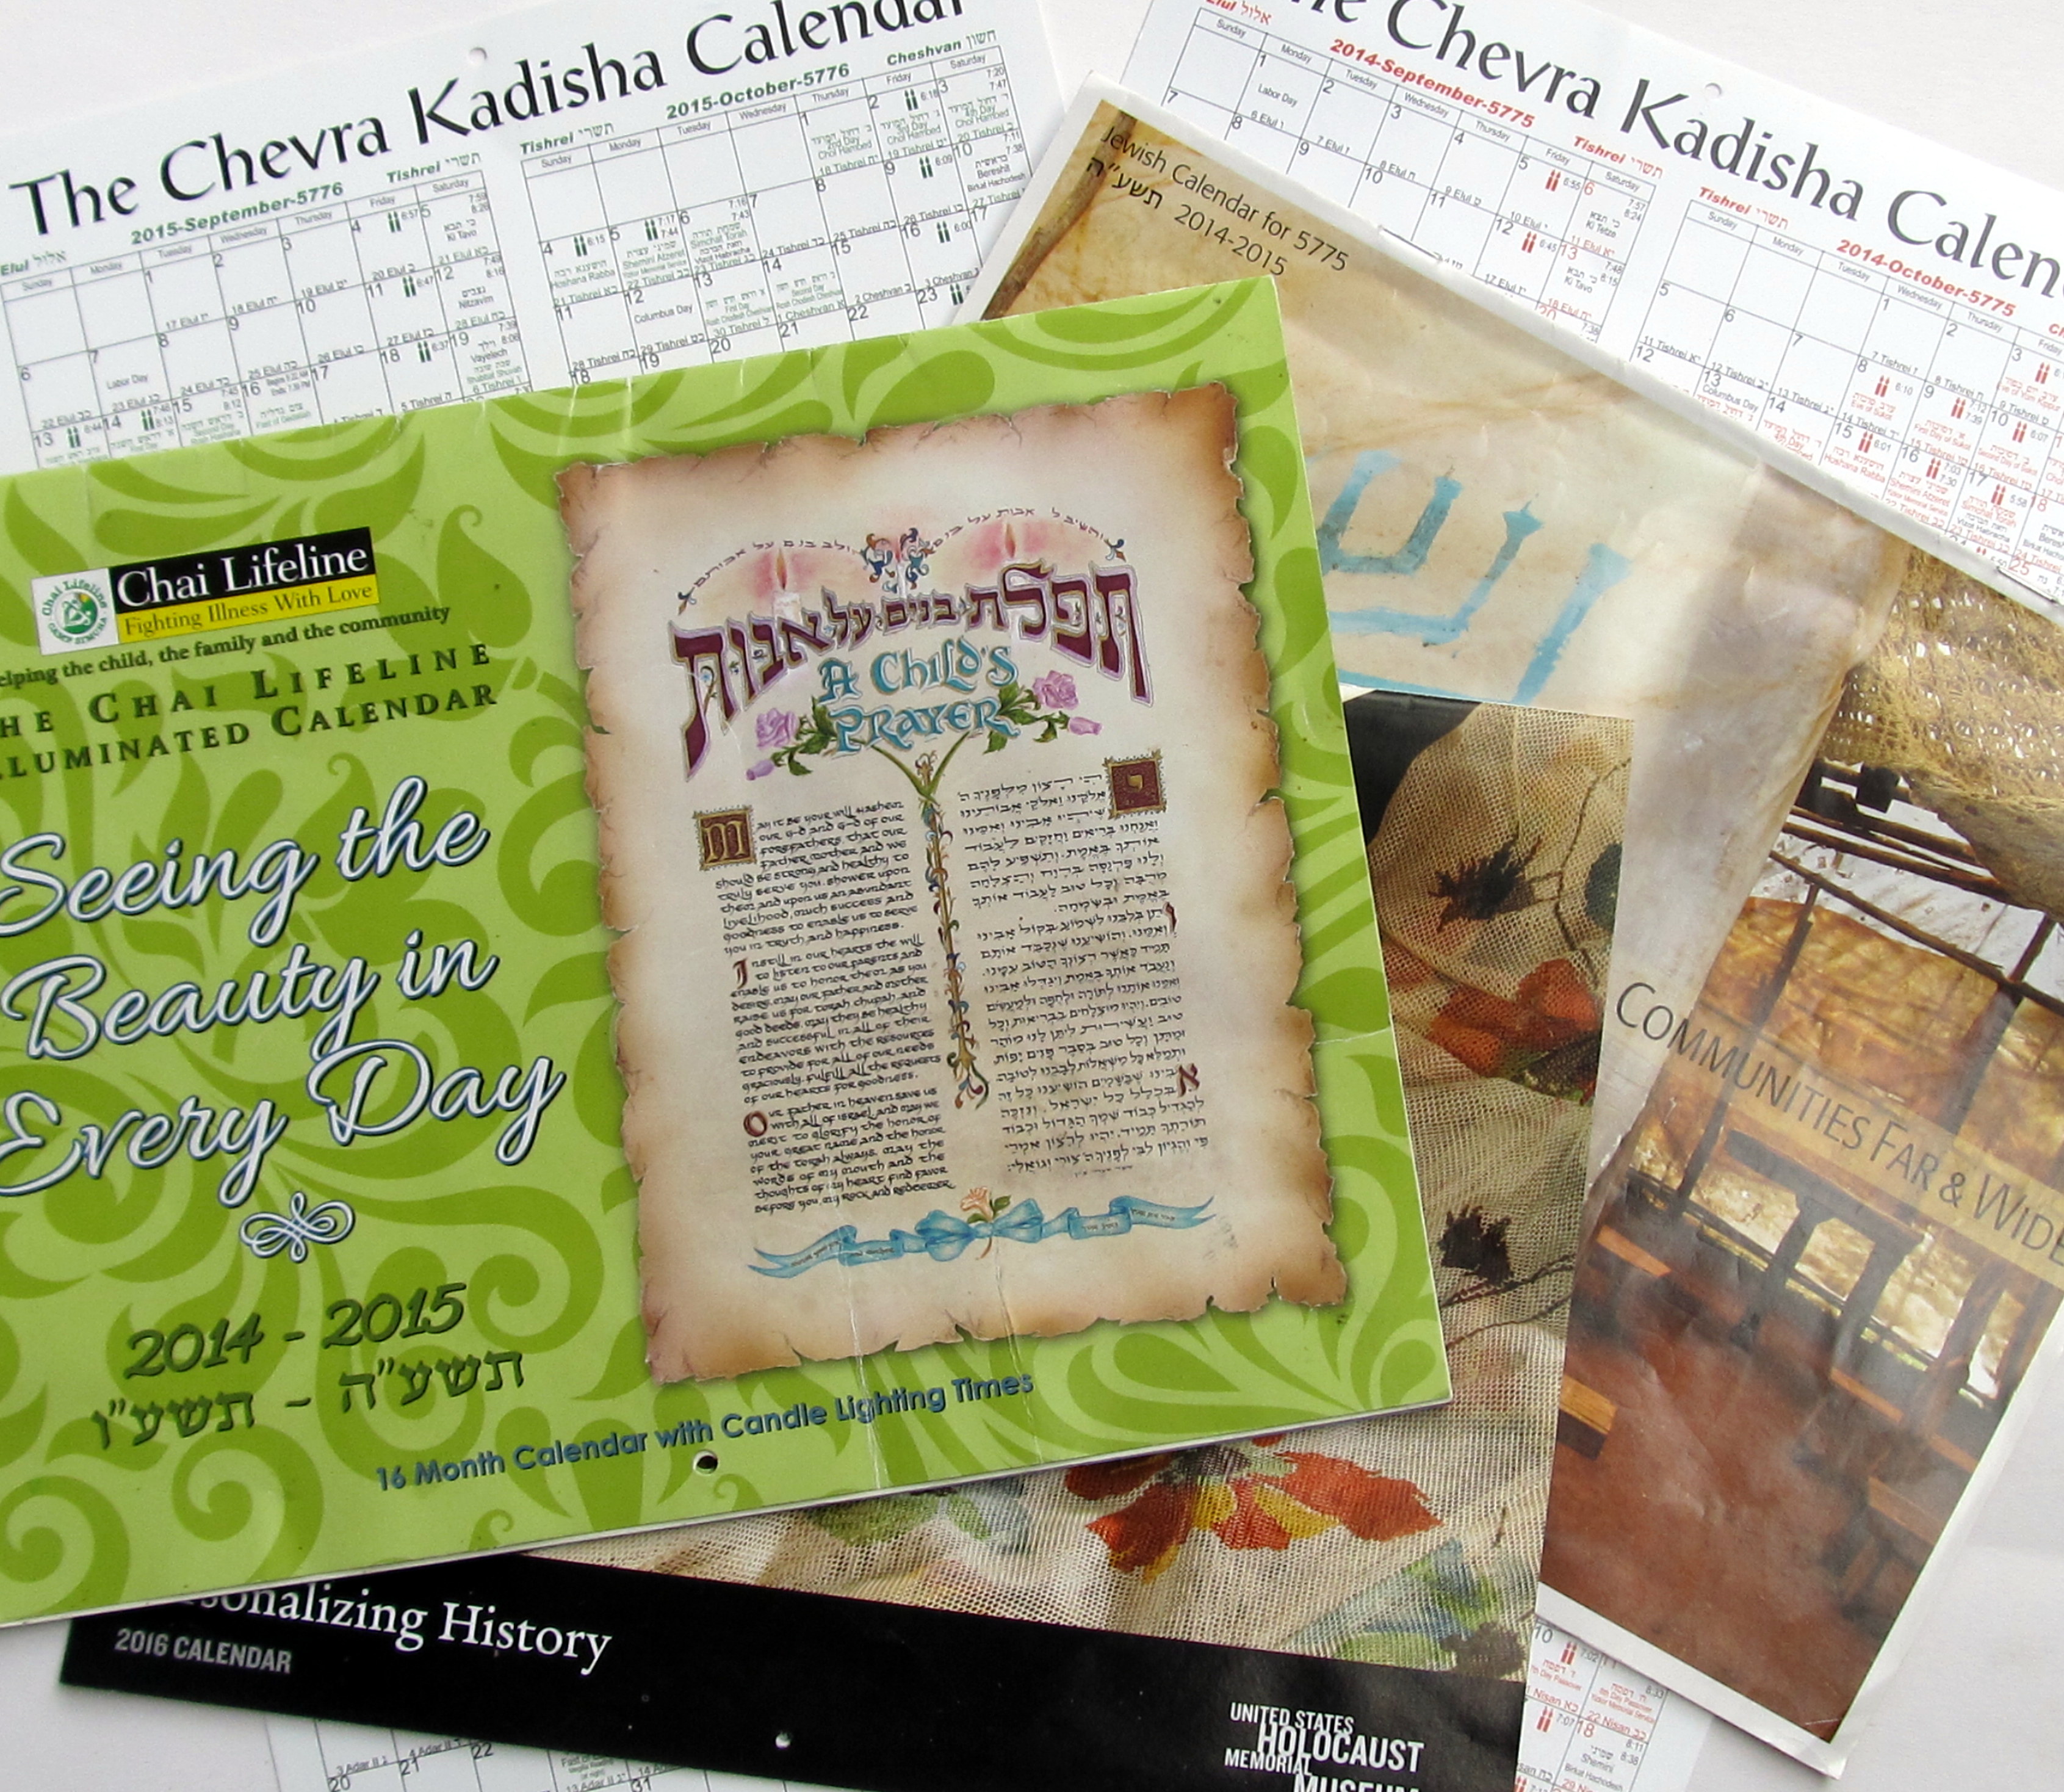 Jewish calendars help keep the community on the same page. (Edmon J. Rodman)